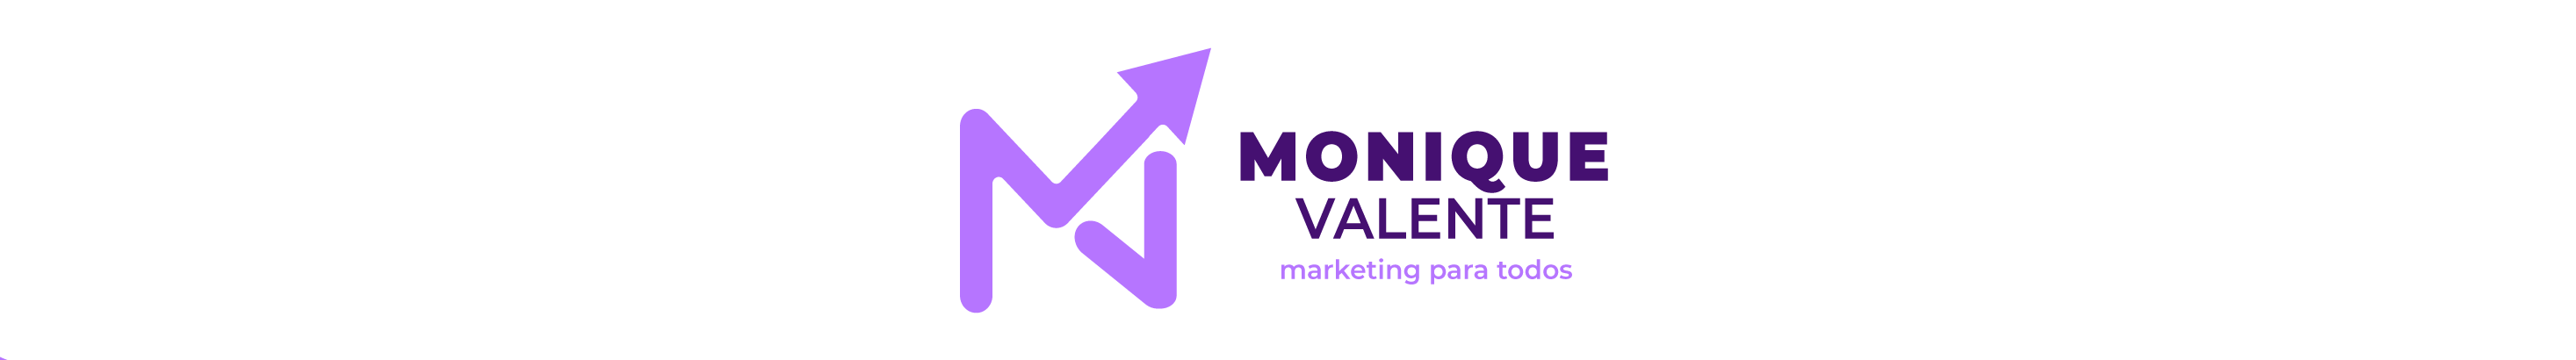 Monique Valente's profile banner